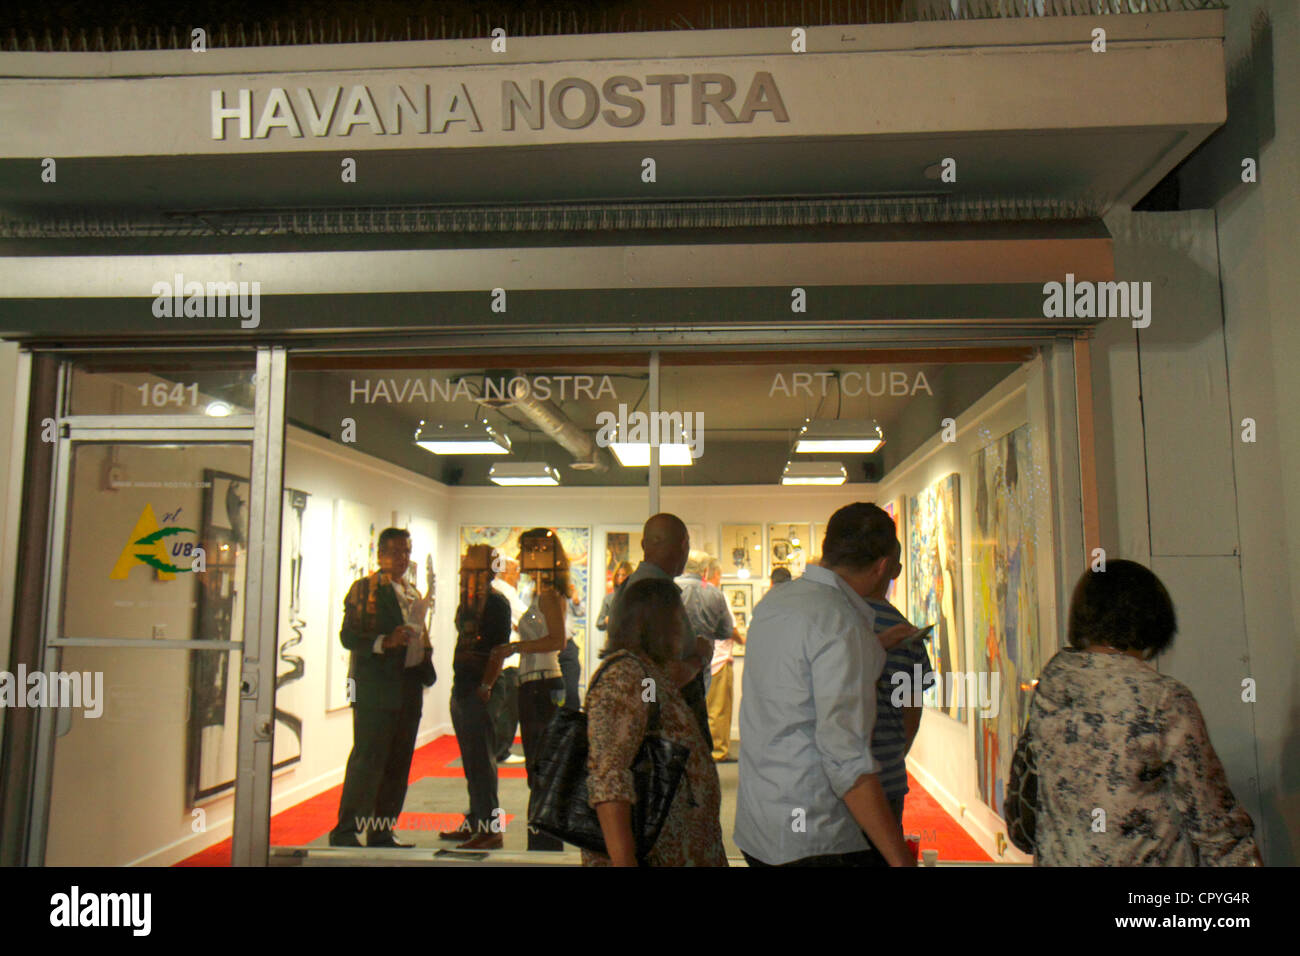 Miami Florida,Little Havana,Calle Ocho,Viernes Culturales,Cultural Fridays,monthly street festival,Havana Nostra,Art Cuba,art gallery,paintings,displa Stock Photo